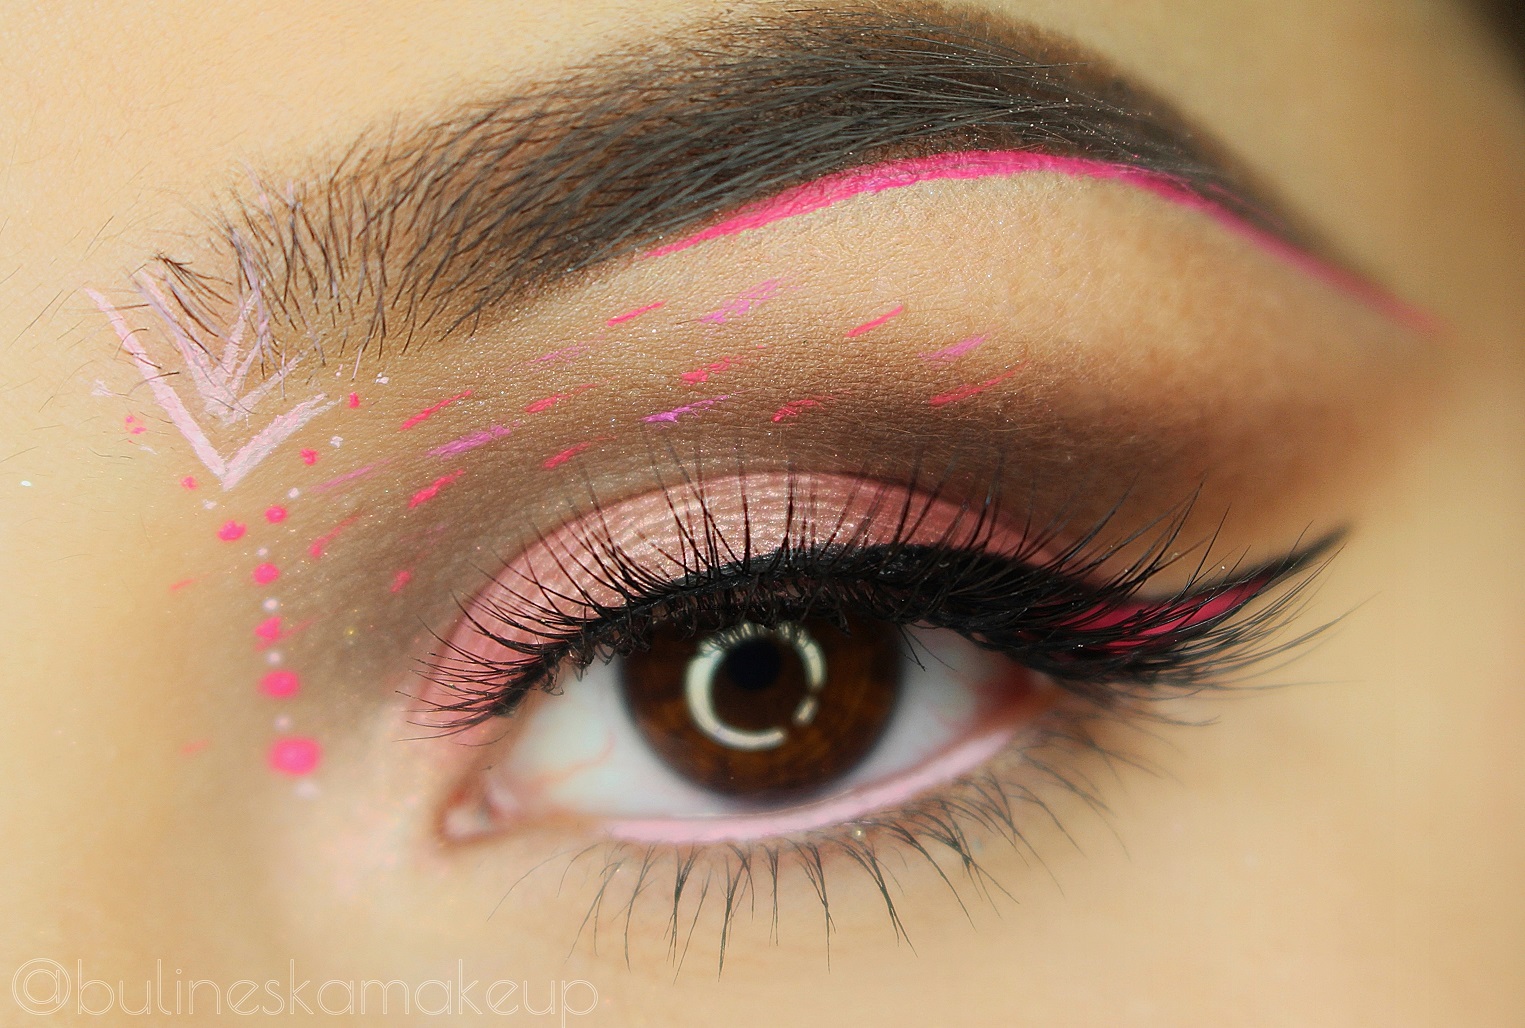 Pink neon wing makeup with neon flecks